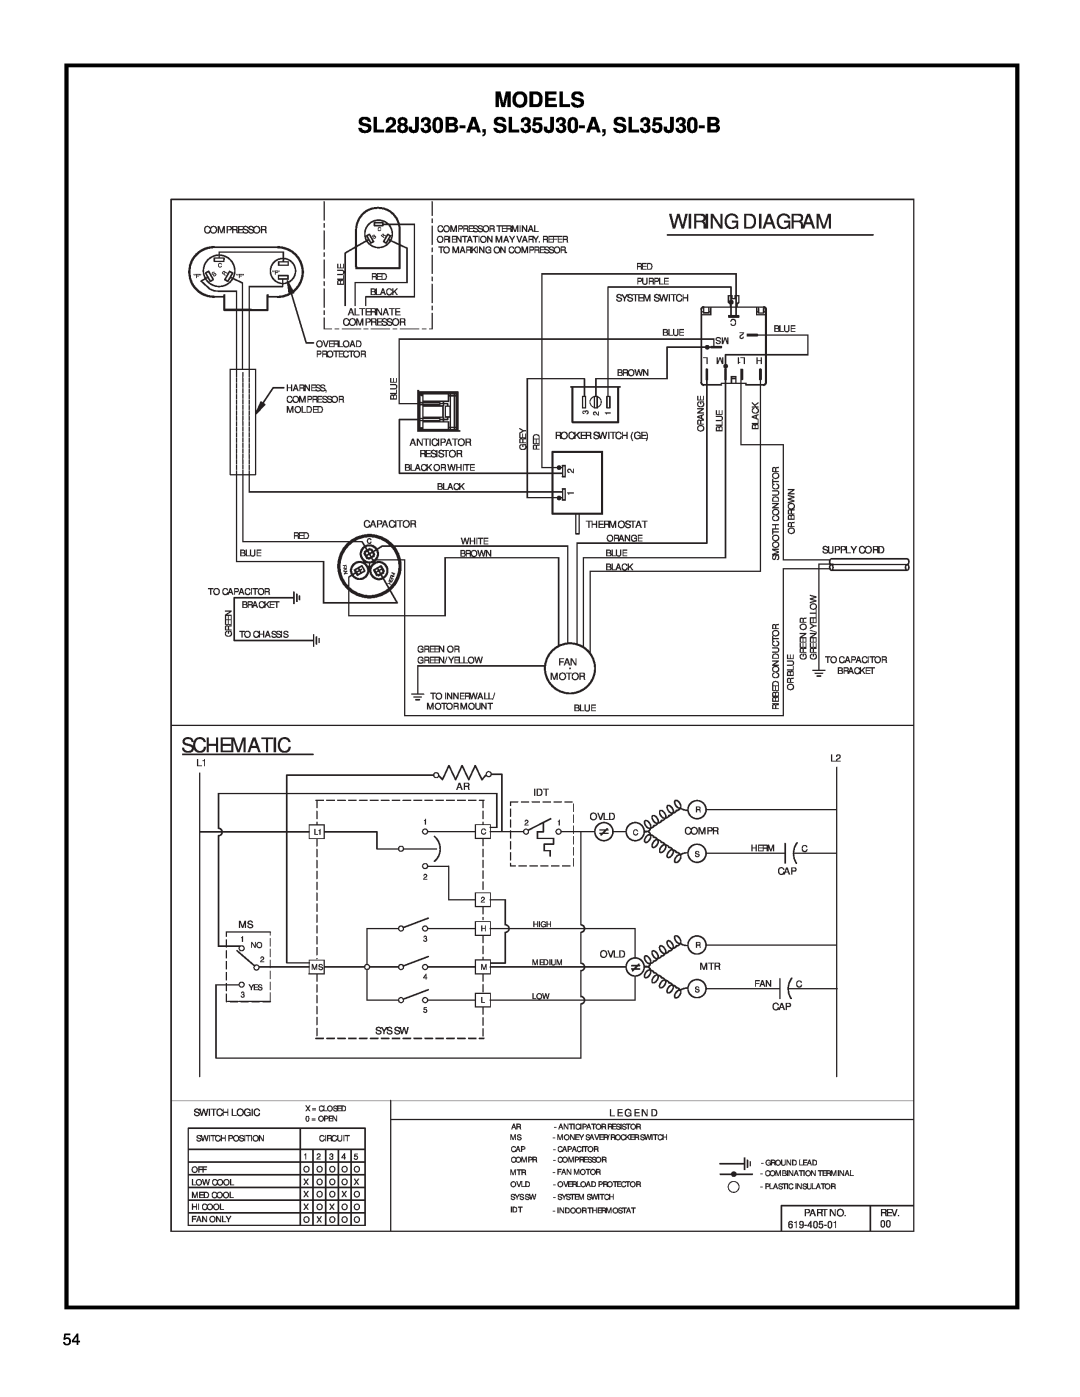 Friedrich 2003 service manual Schematic, MODELS SL28J30B-A, SL35J30-A, SL35J30-B, Wiring Diagram 